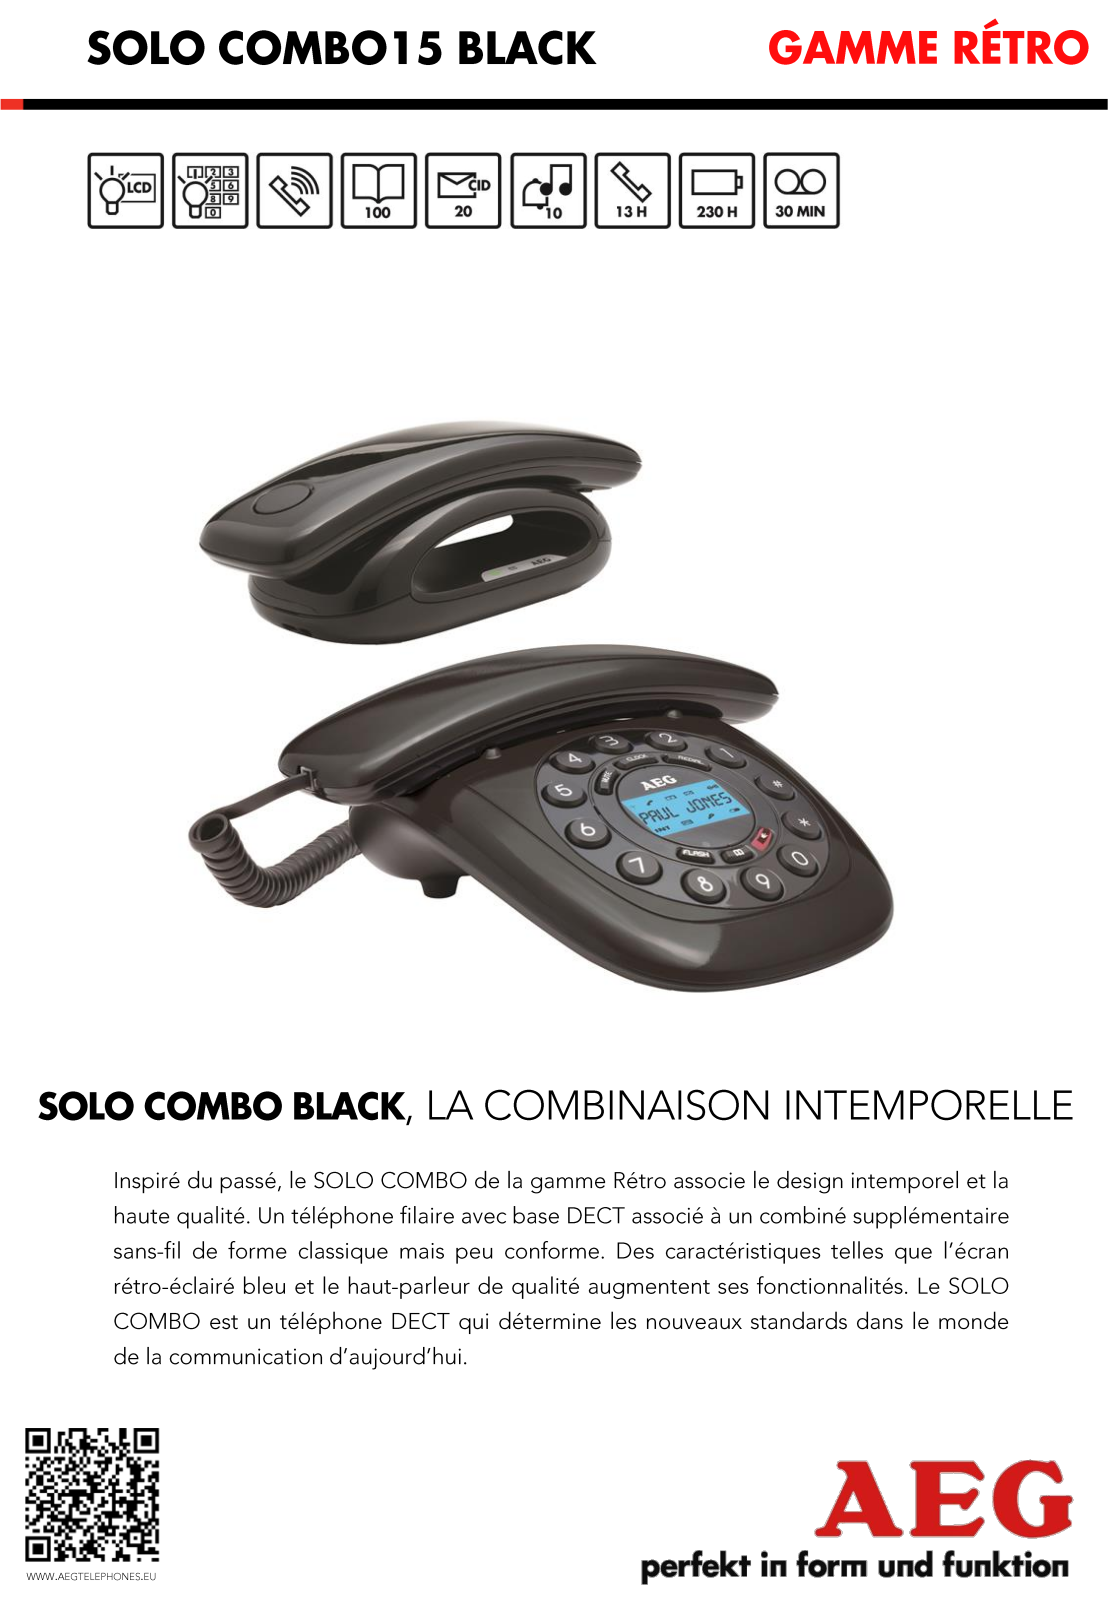 AEG Solo Combo 15 Black product sheet